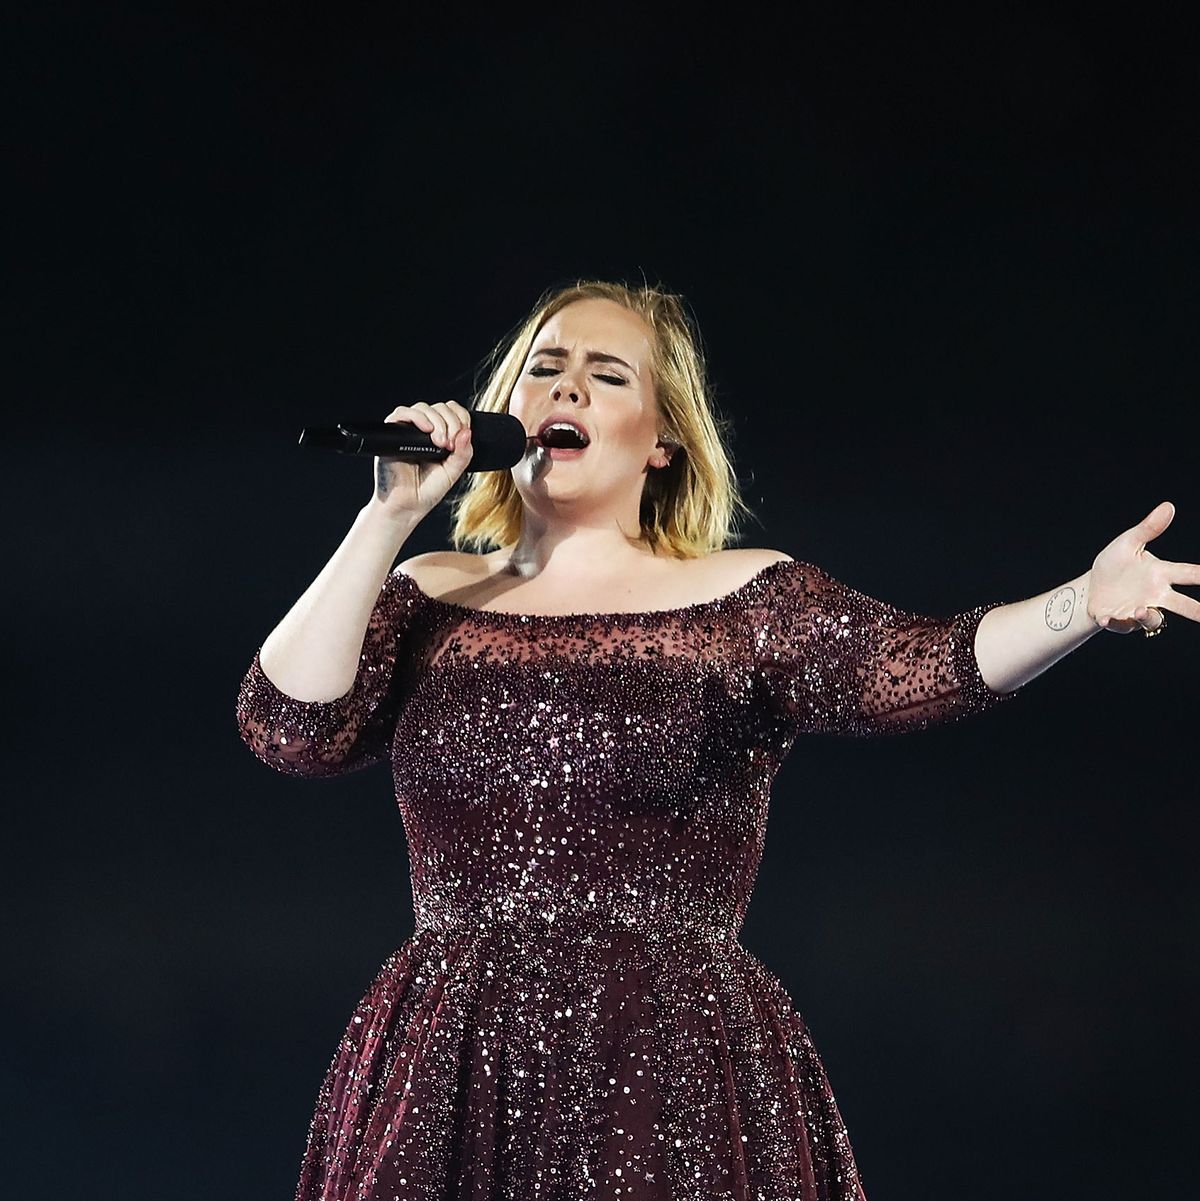 ligevægt skrå modstand 30 of the Best Adele Songs to Date - Adele Songs List